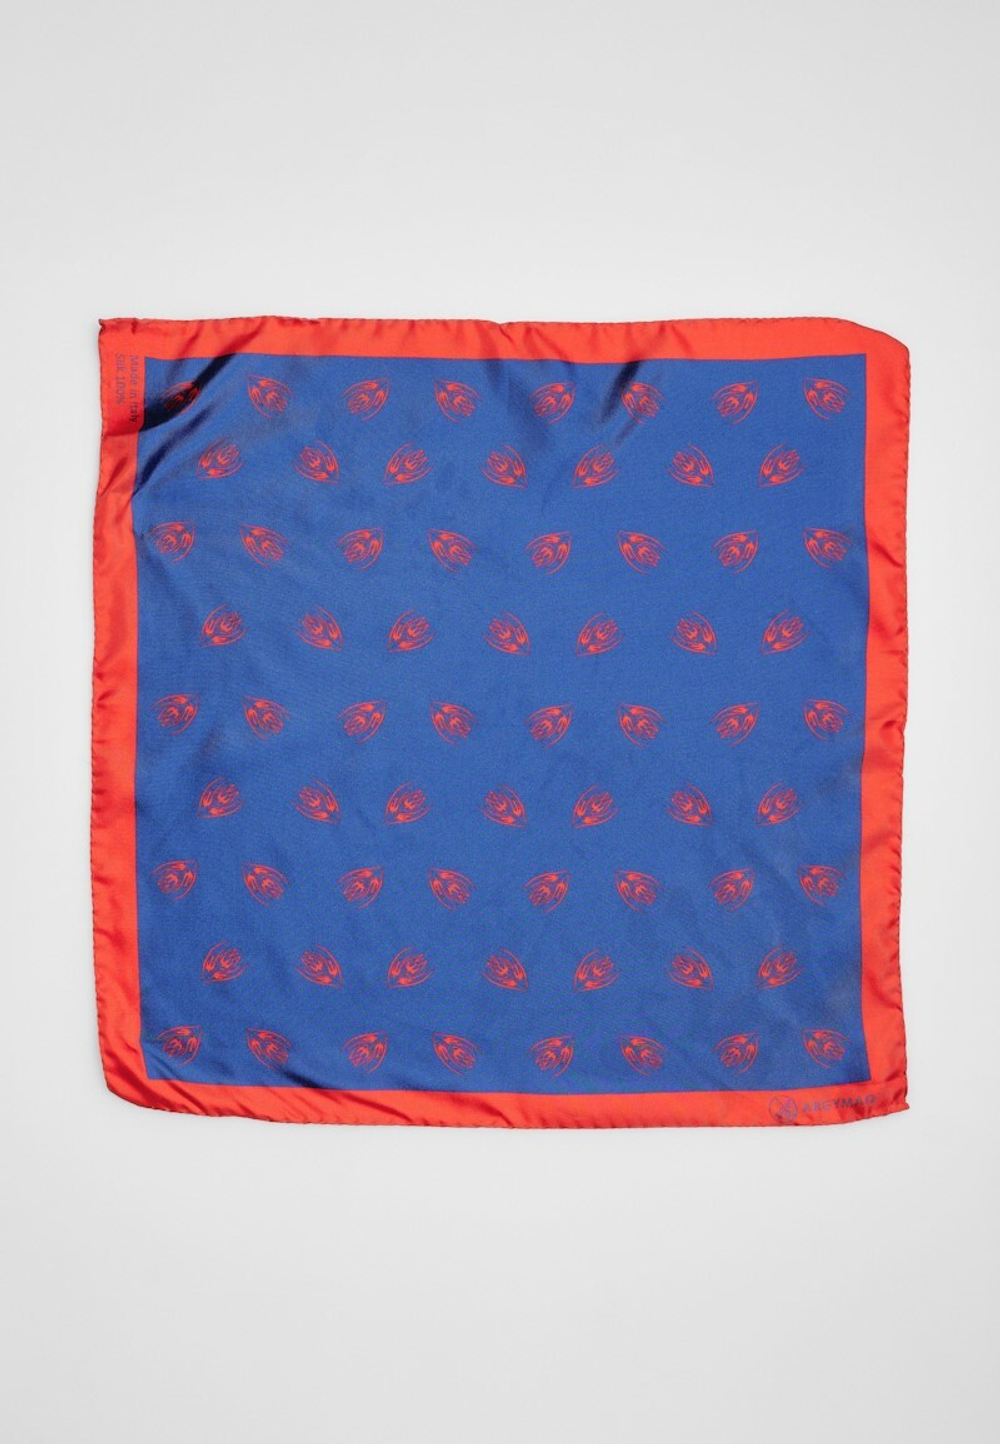 Шелковый платок Ласточка и тюльпан BLUE/RED 45x45